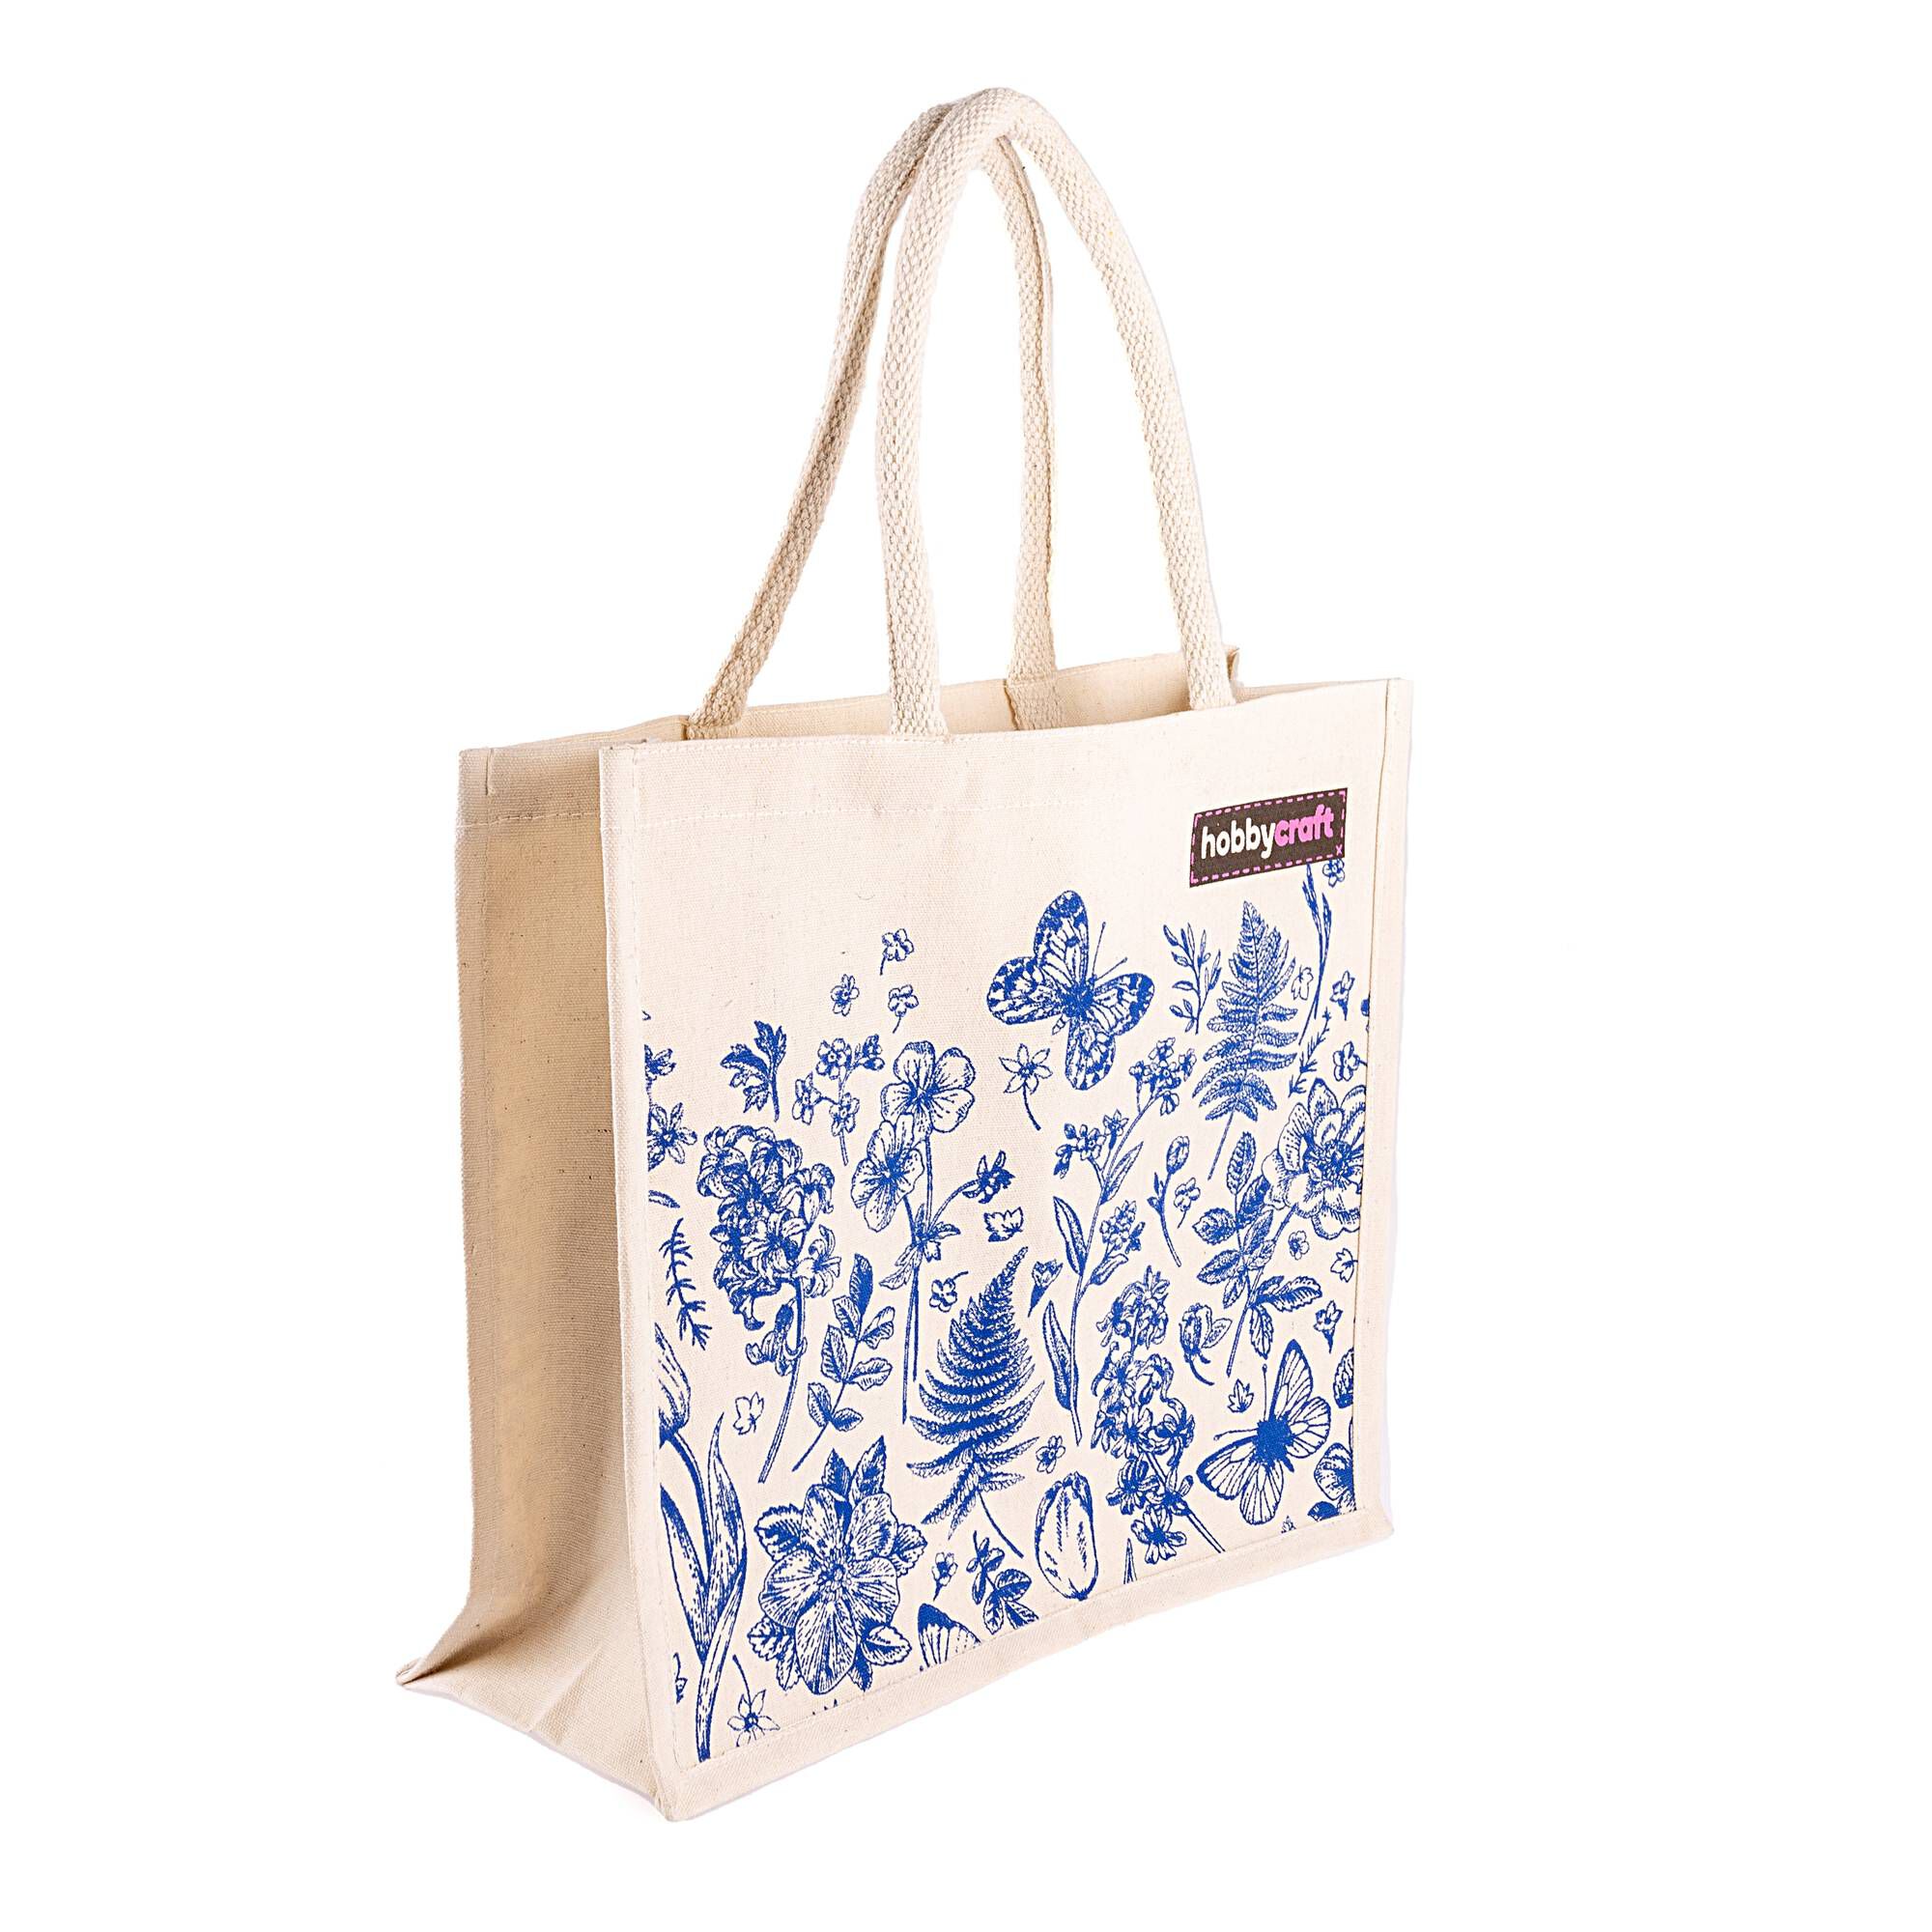 664675 1000 2 hobbycraft canvas bag for life blue floral jute